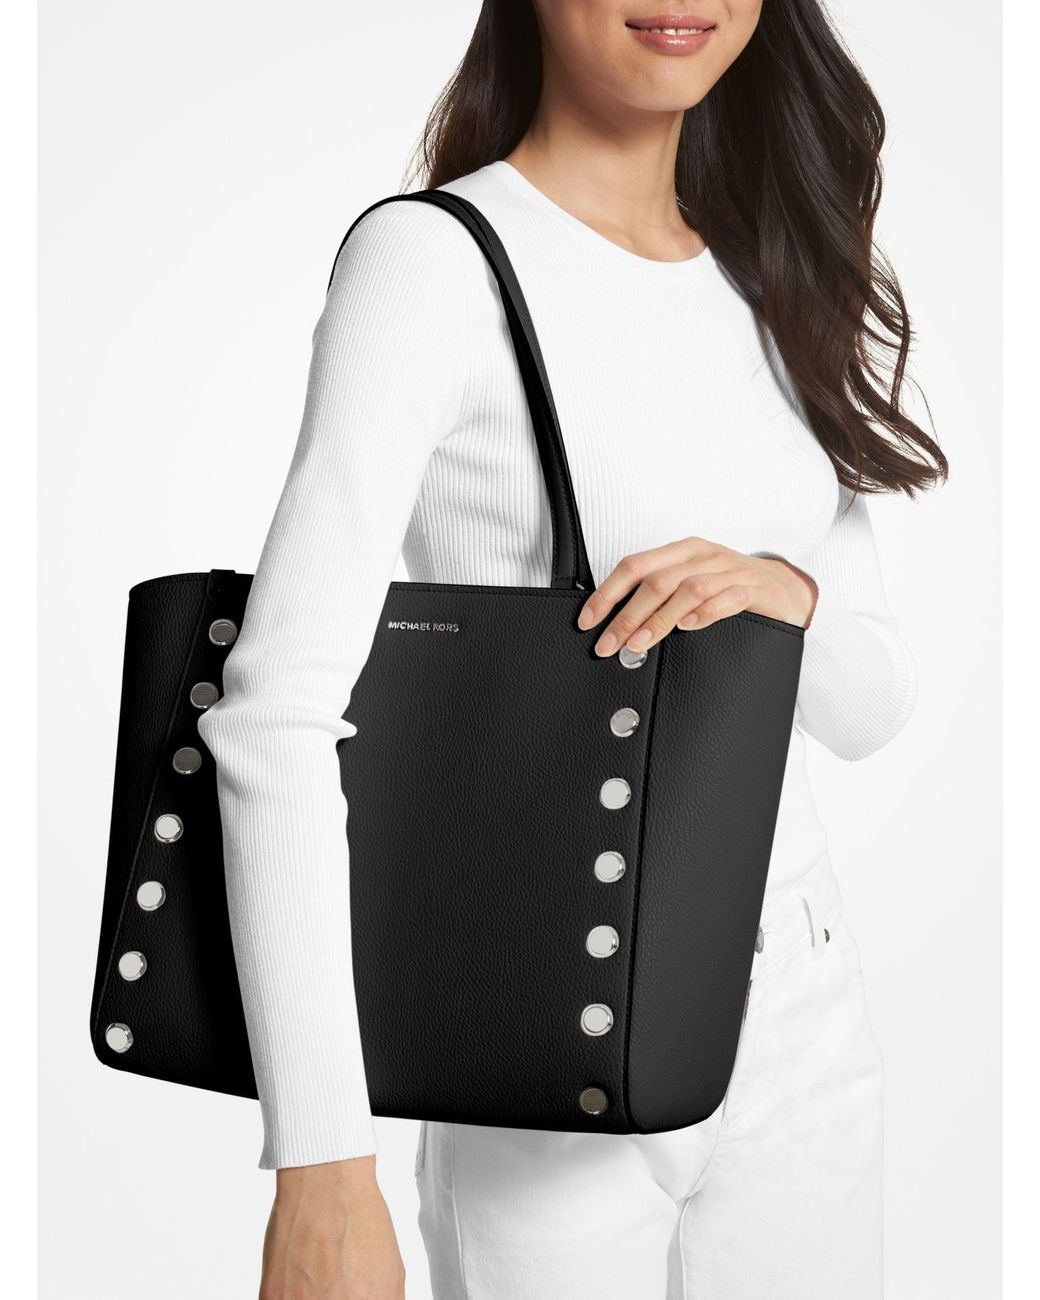 Shop Michael Kors WHITNEY Classic Michael Kors Whitney Large Studded  Saffiano Shoulder Bag by Zinute | BUYMA